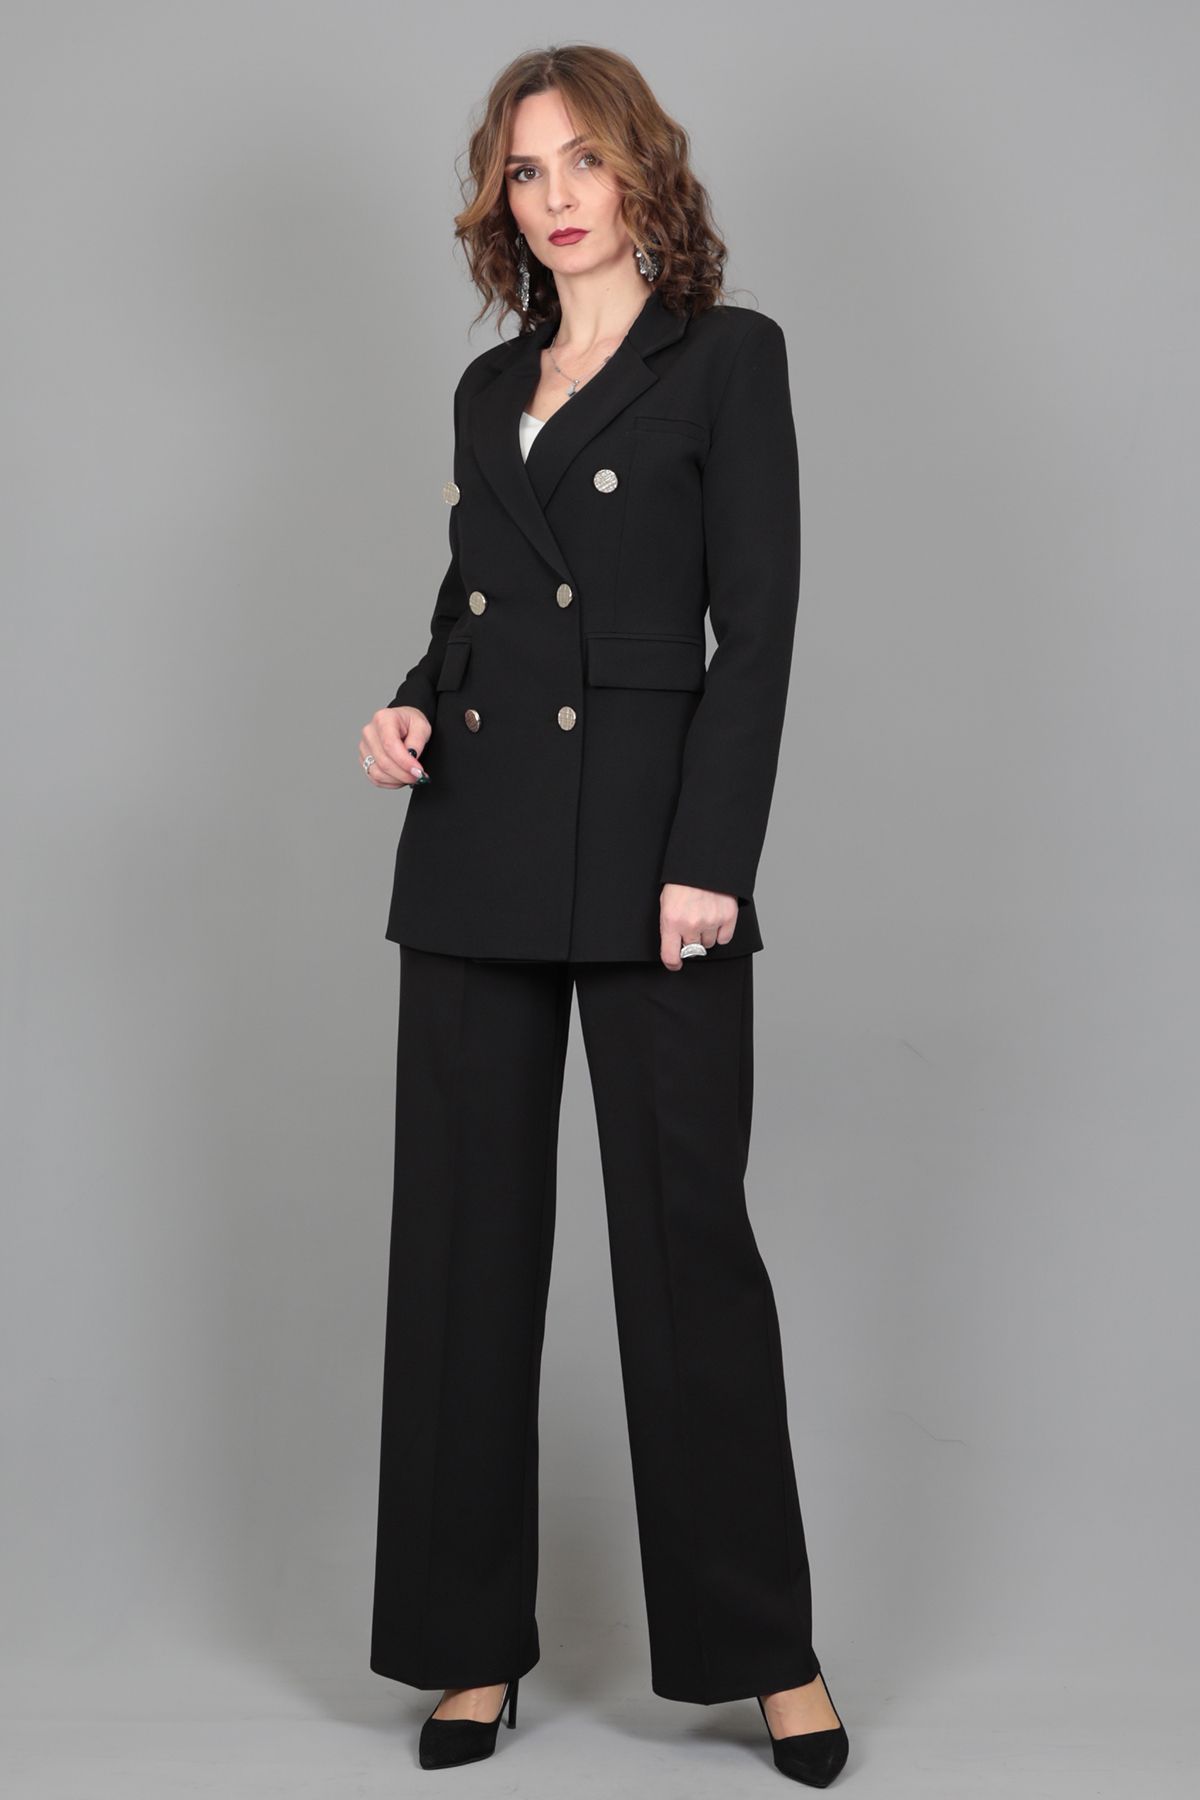 Blazer Ceket & Bol Paça Pantolon Takım-Siyah - Önder Özsoy | Ofis Giyim |  Yeni Sezon